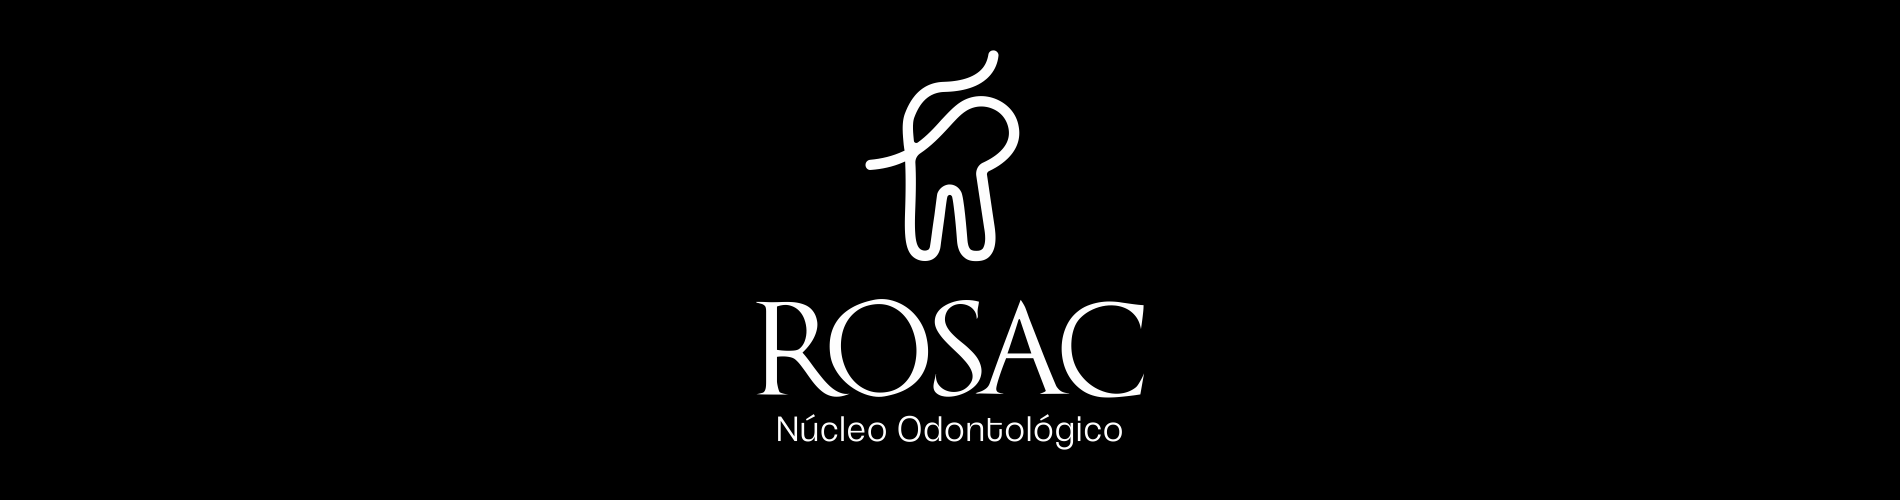 Rosac